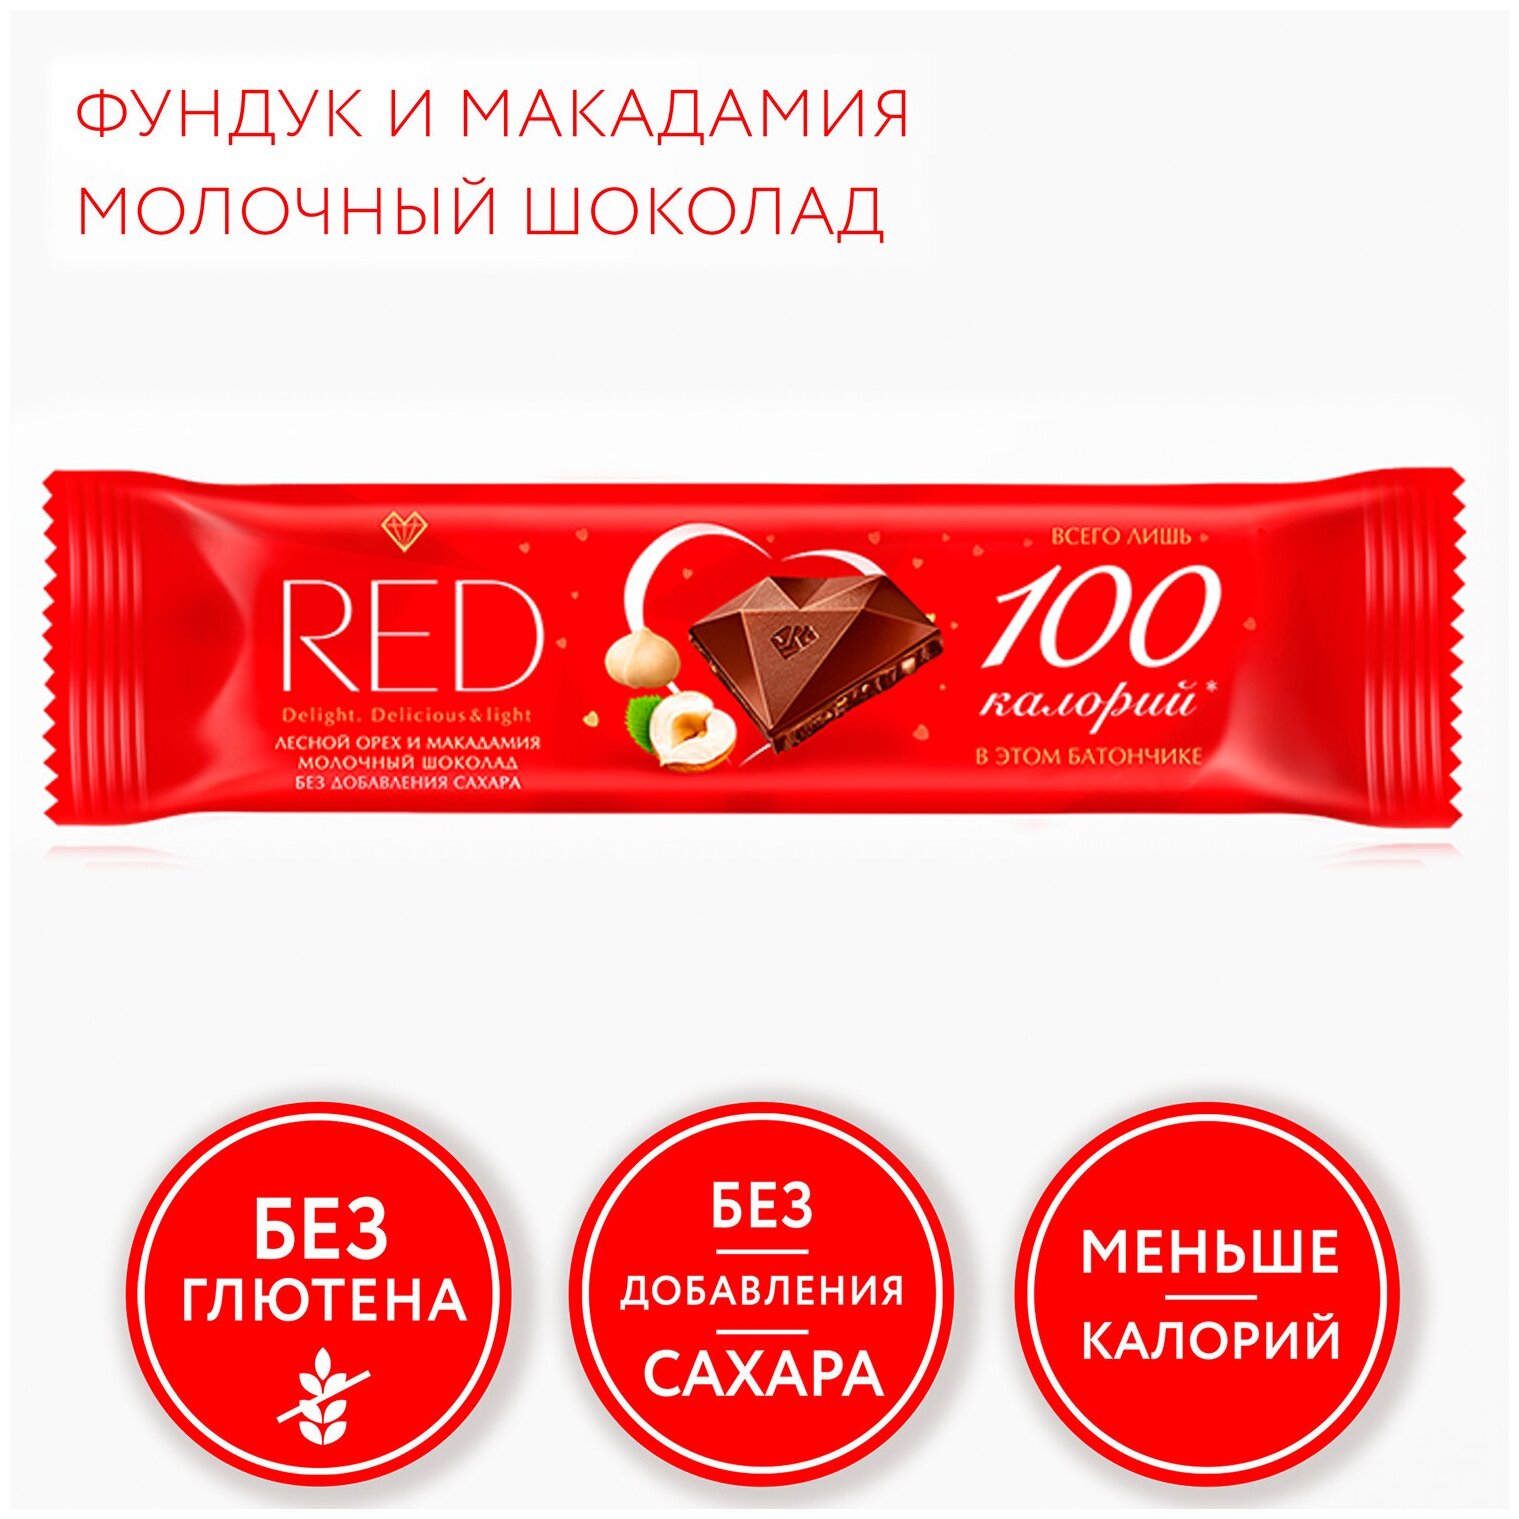 RED Молочный шоколад Фундук и Макадамия 26гр 1шт. - фотография № 6